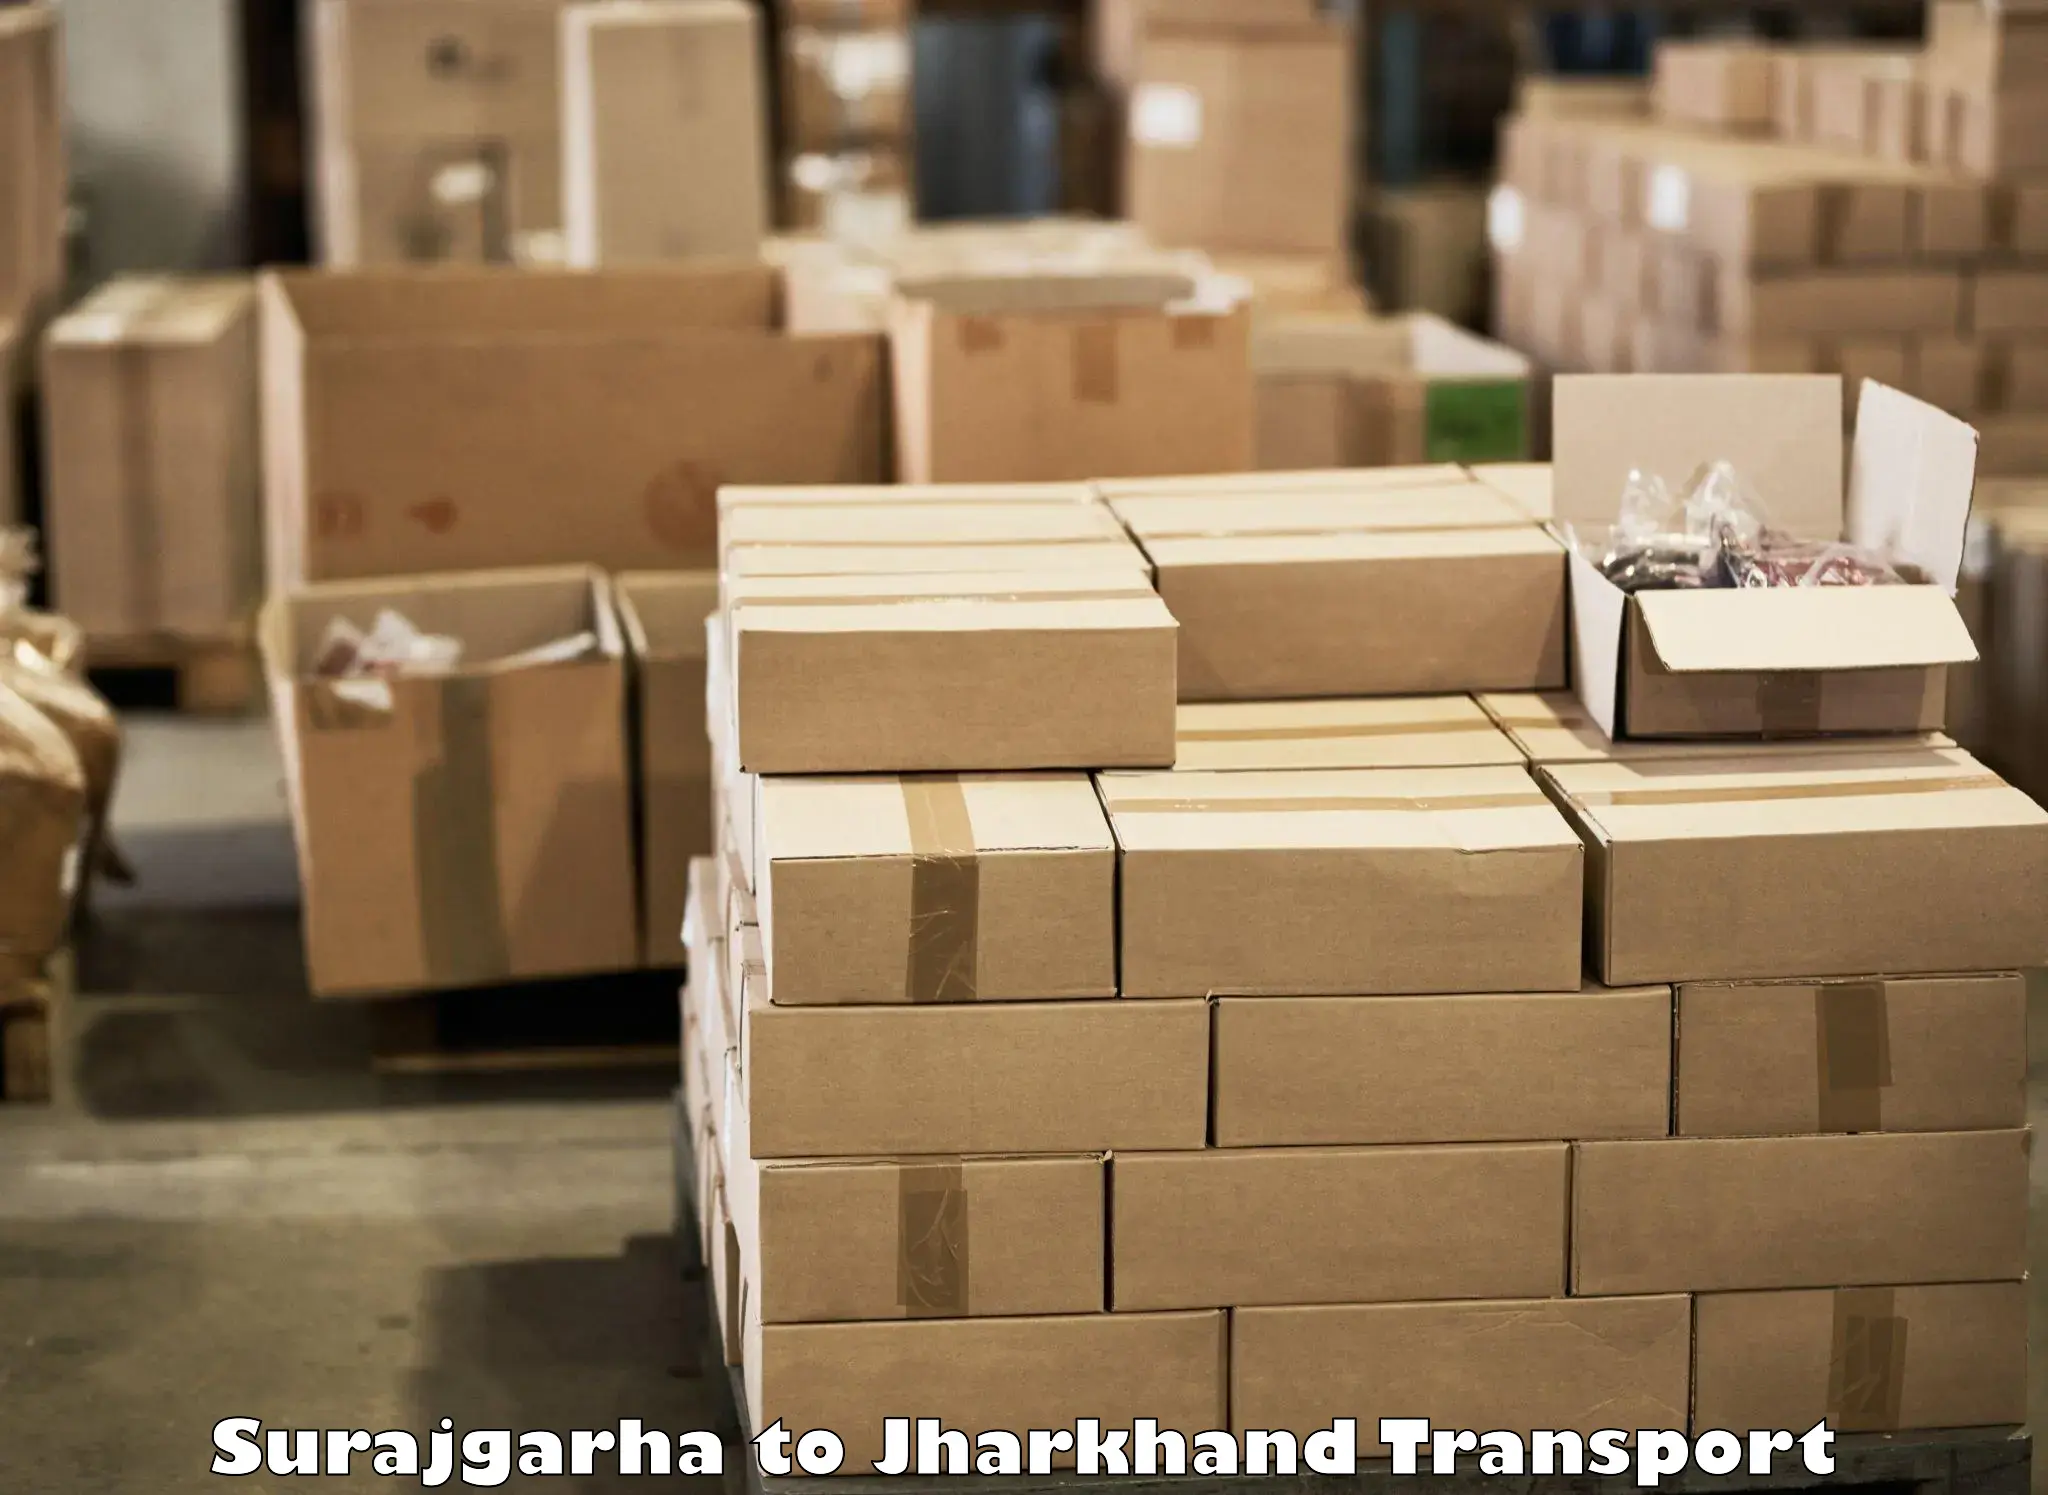 Truck transport companies in India Surajgarha to Ranchi